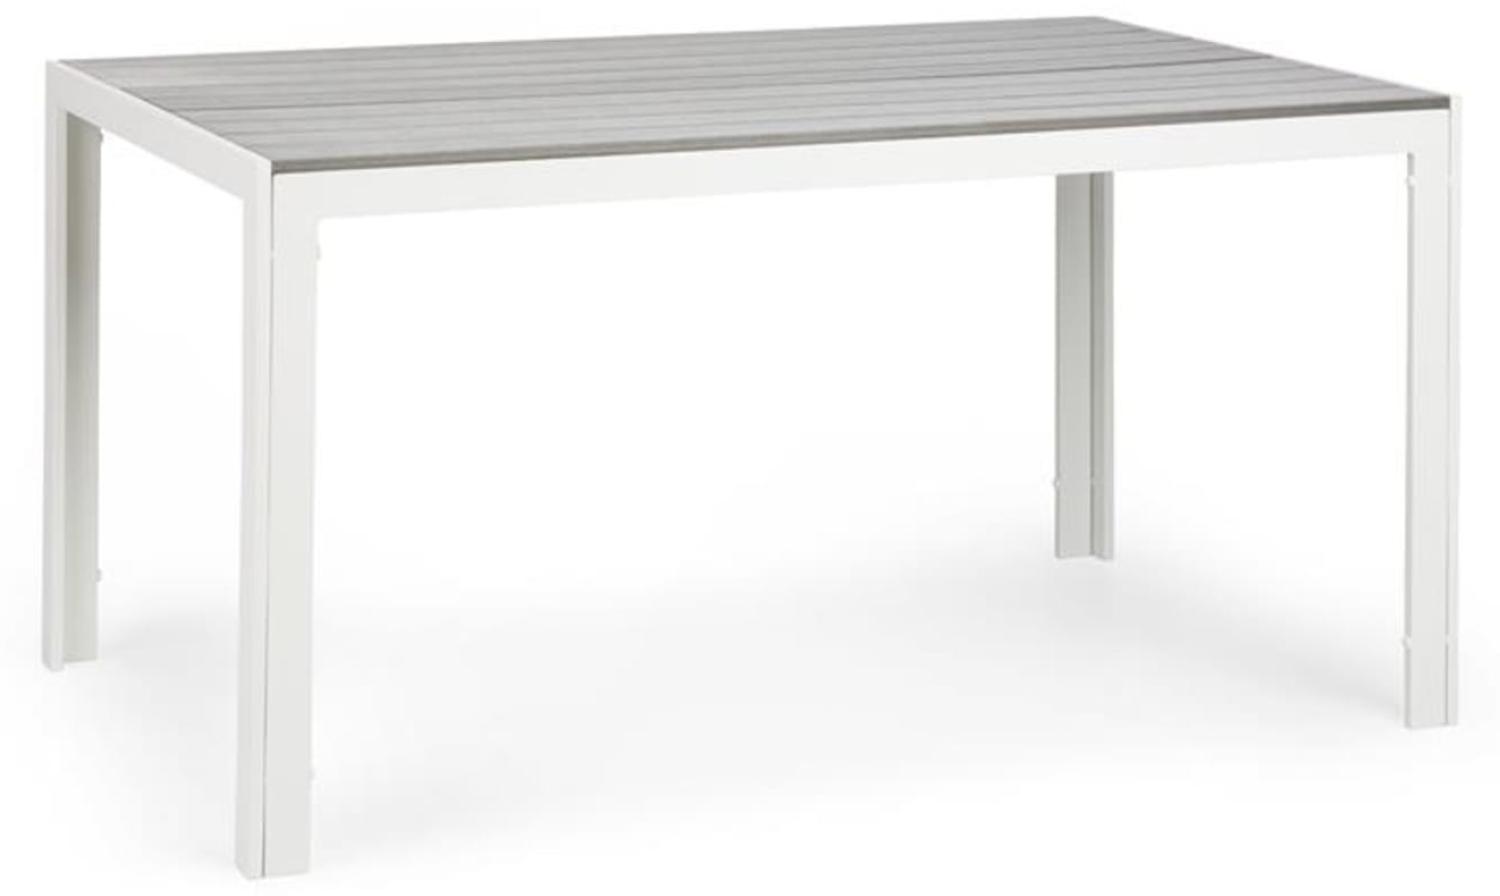 Bilbao Gartentisch 150 x 90 cm Polywood Aluminium weiß/grau Weiß / grau Bild 1